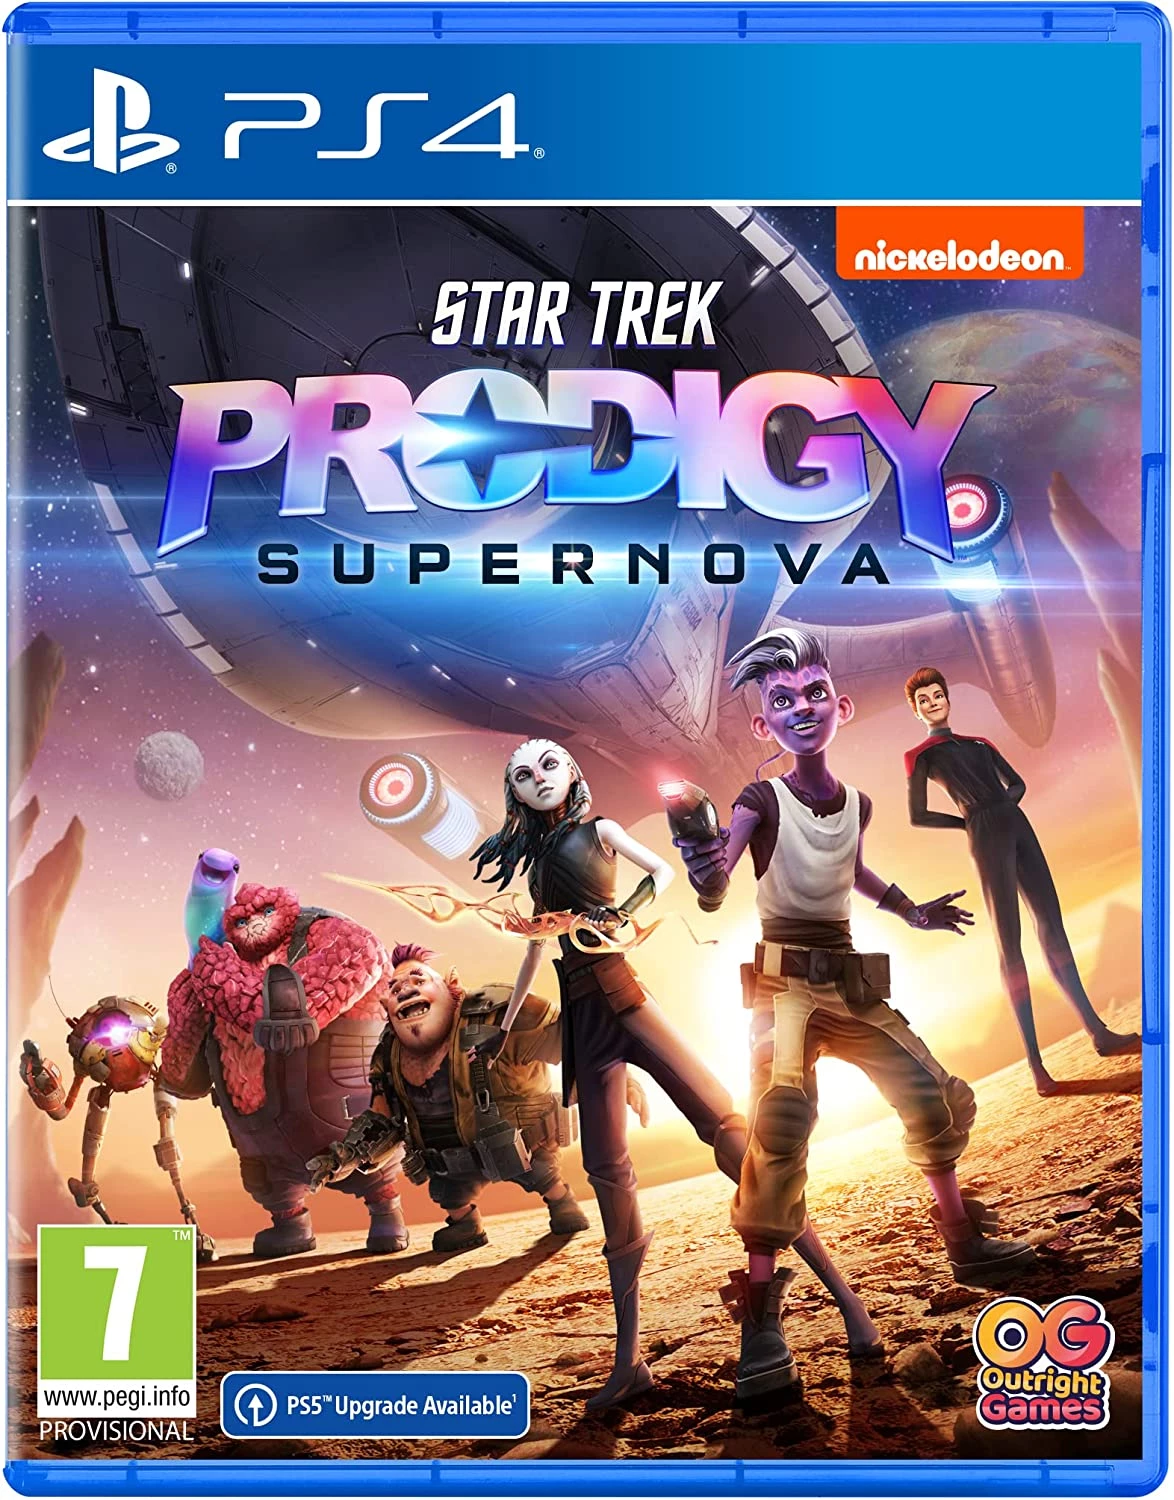 Star Trek: Prodigy Supernova (PS4), Outright Games